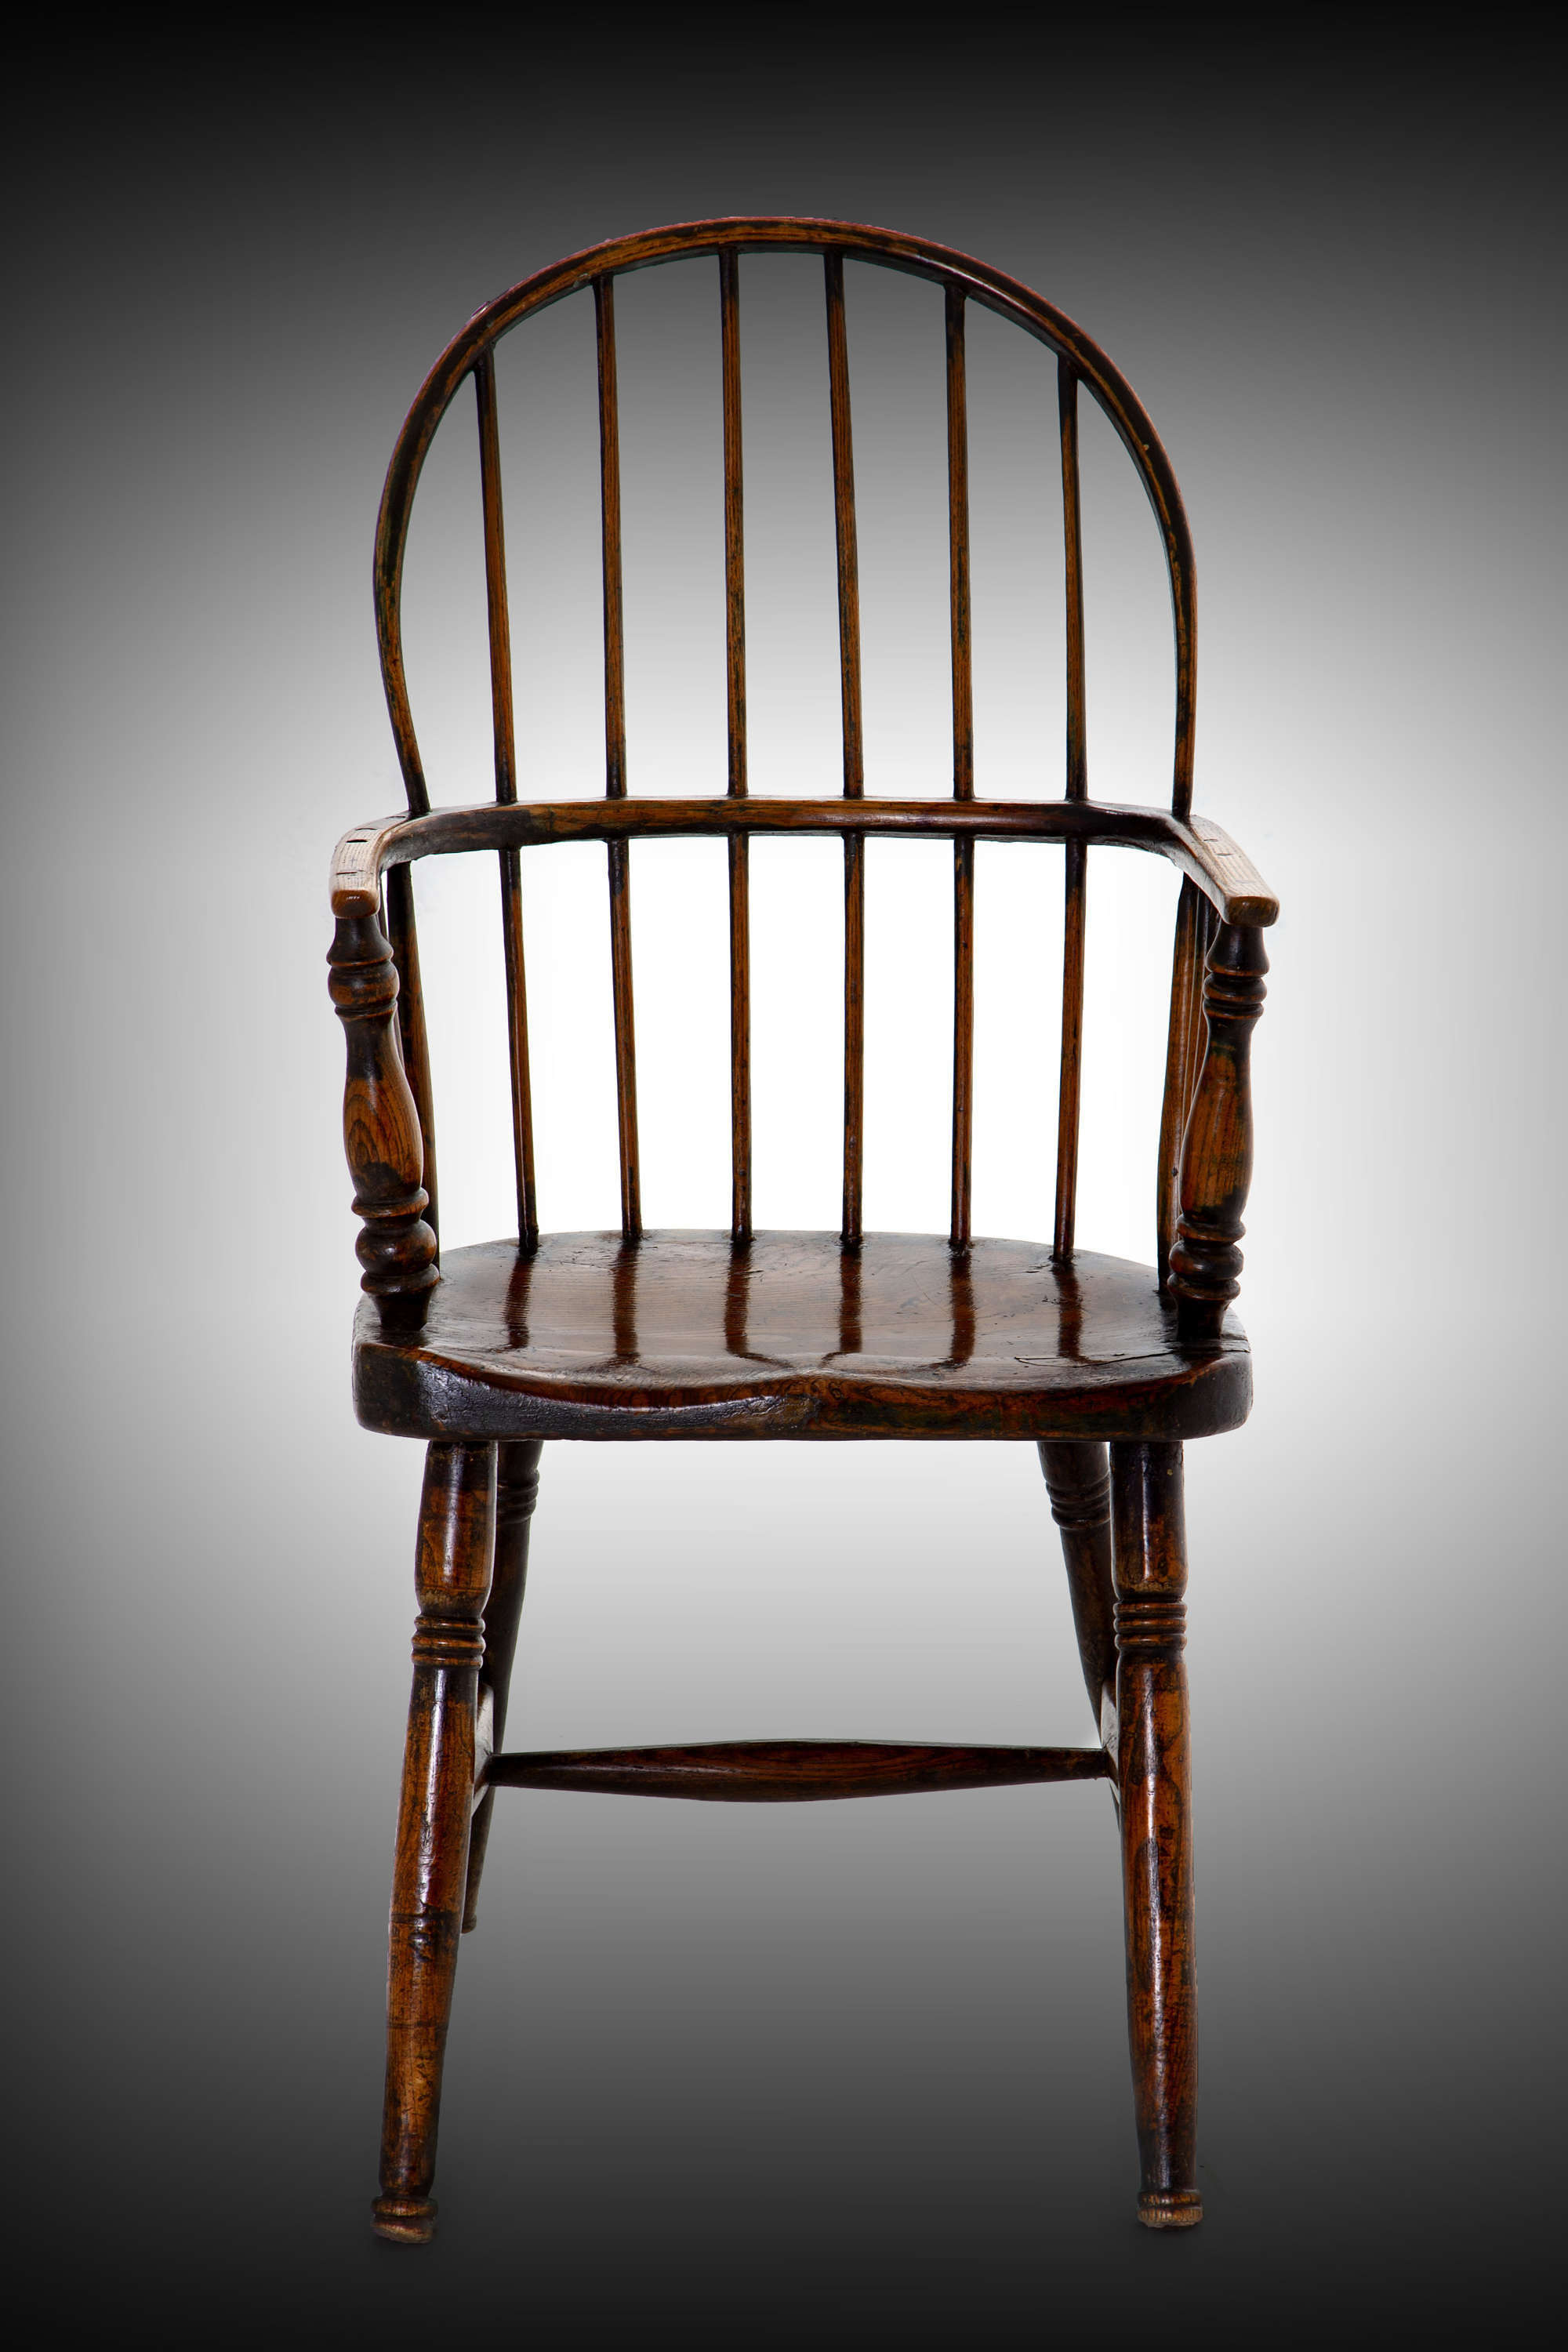 An early 19th century century Windsor chair